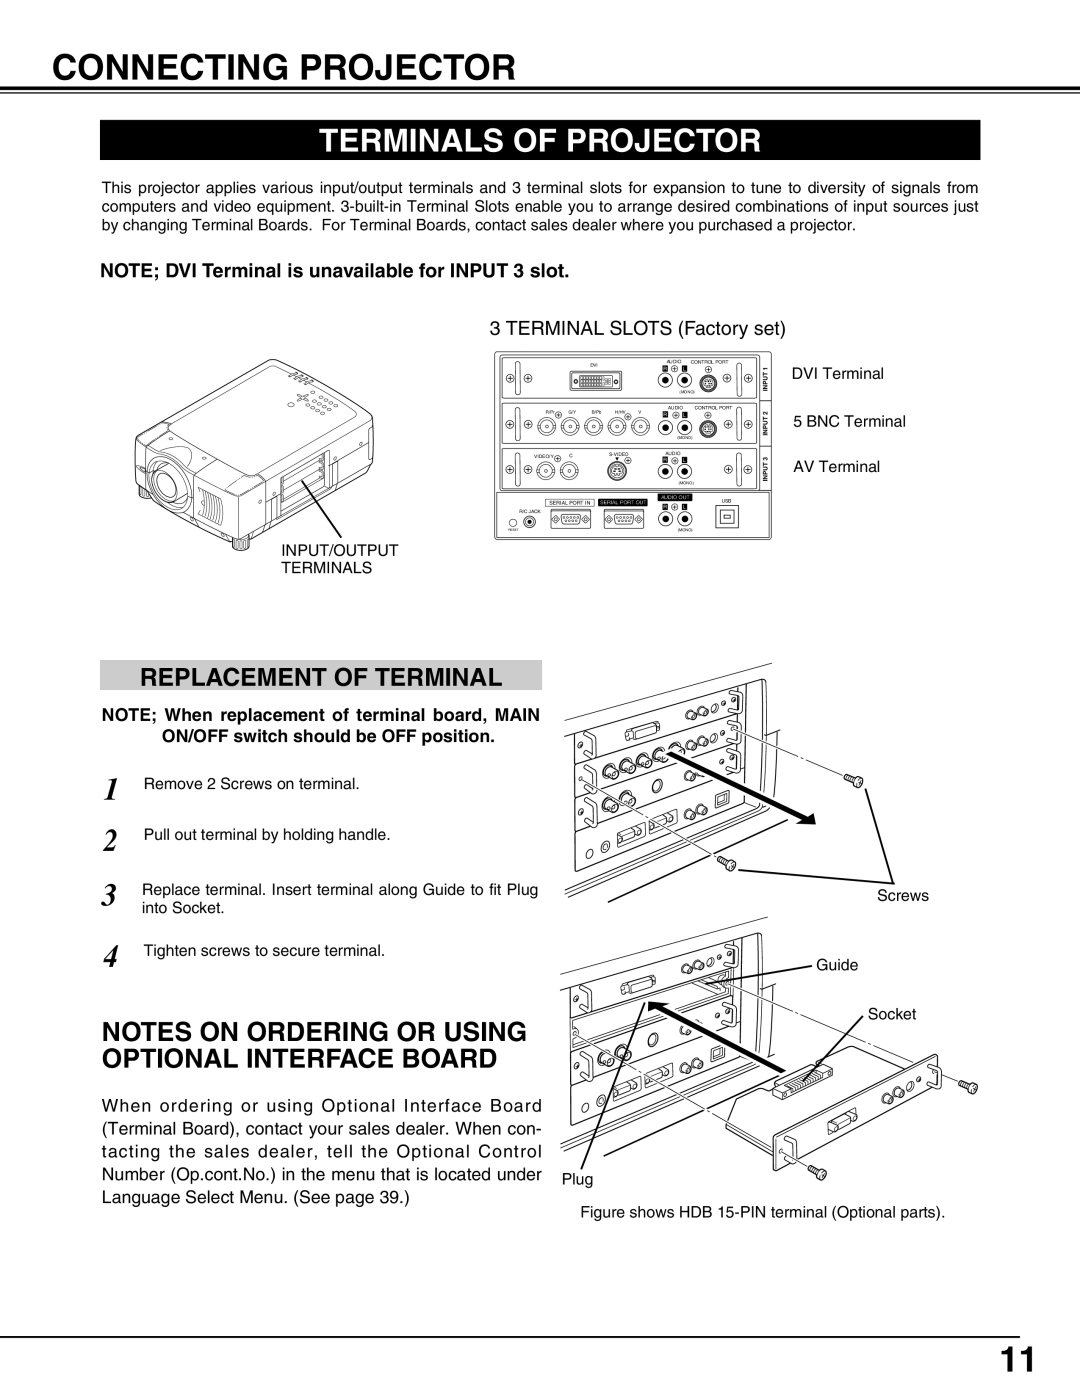 Eiki LC-SX4LA Connecting Projector, Terminals Of Projector, Replacement Of Terminal, TERMINAL SLOTS Factory set 